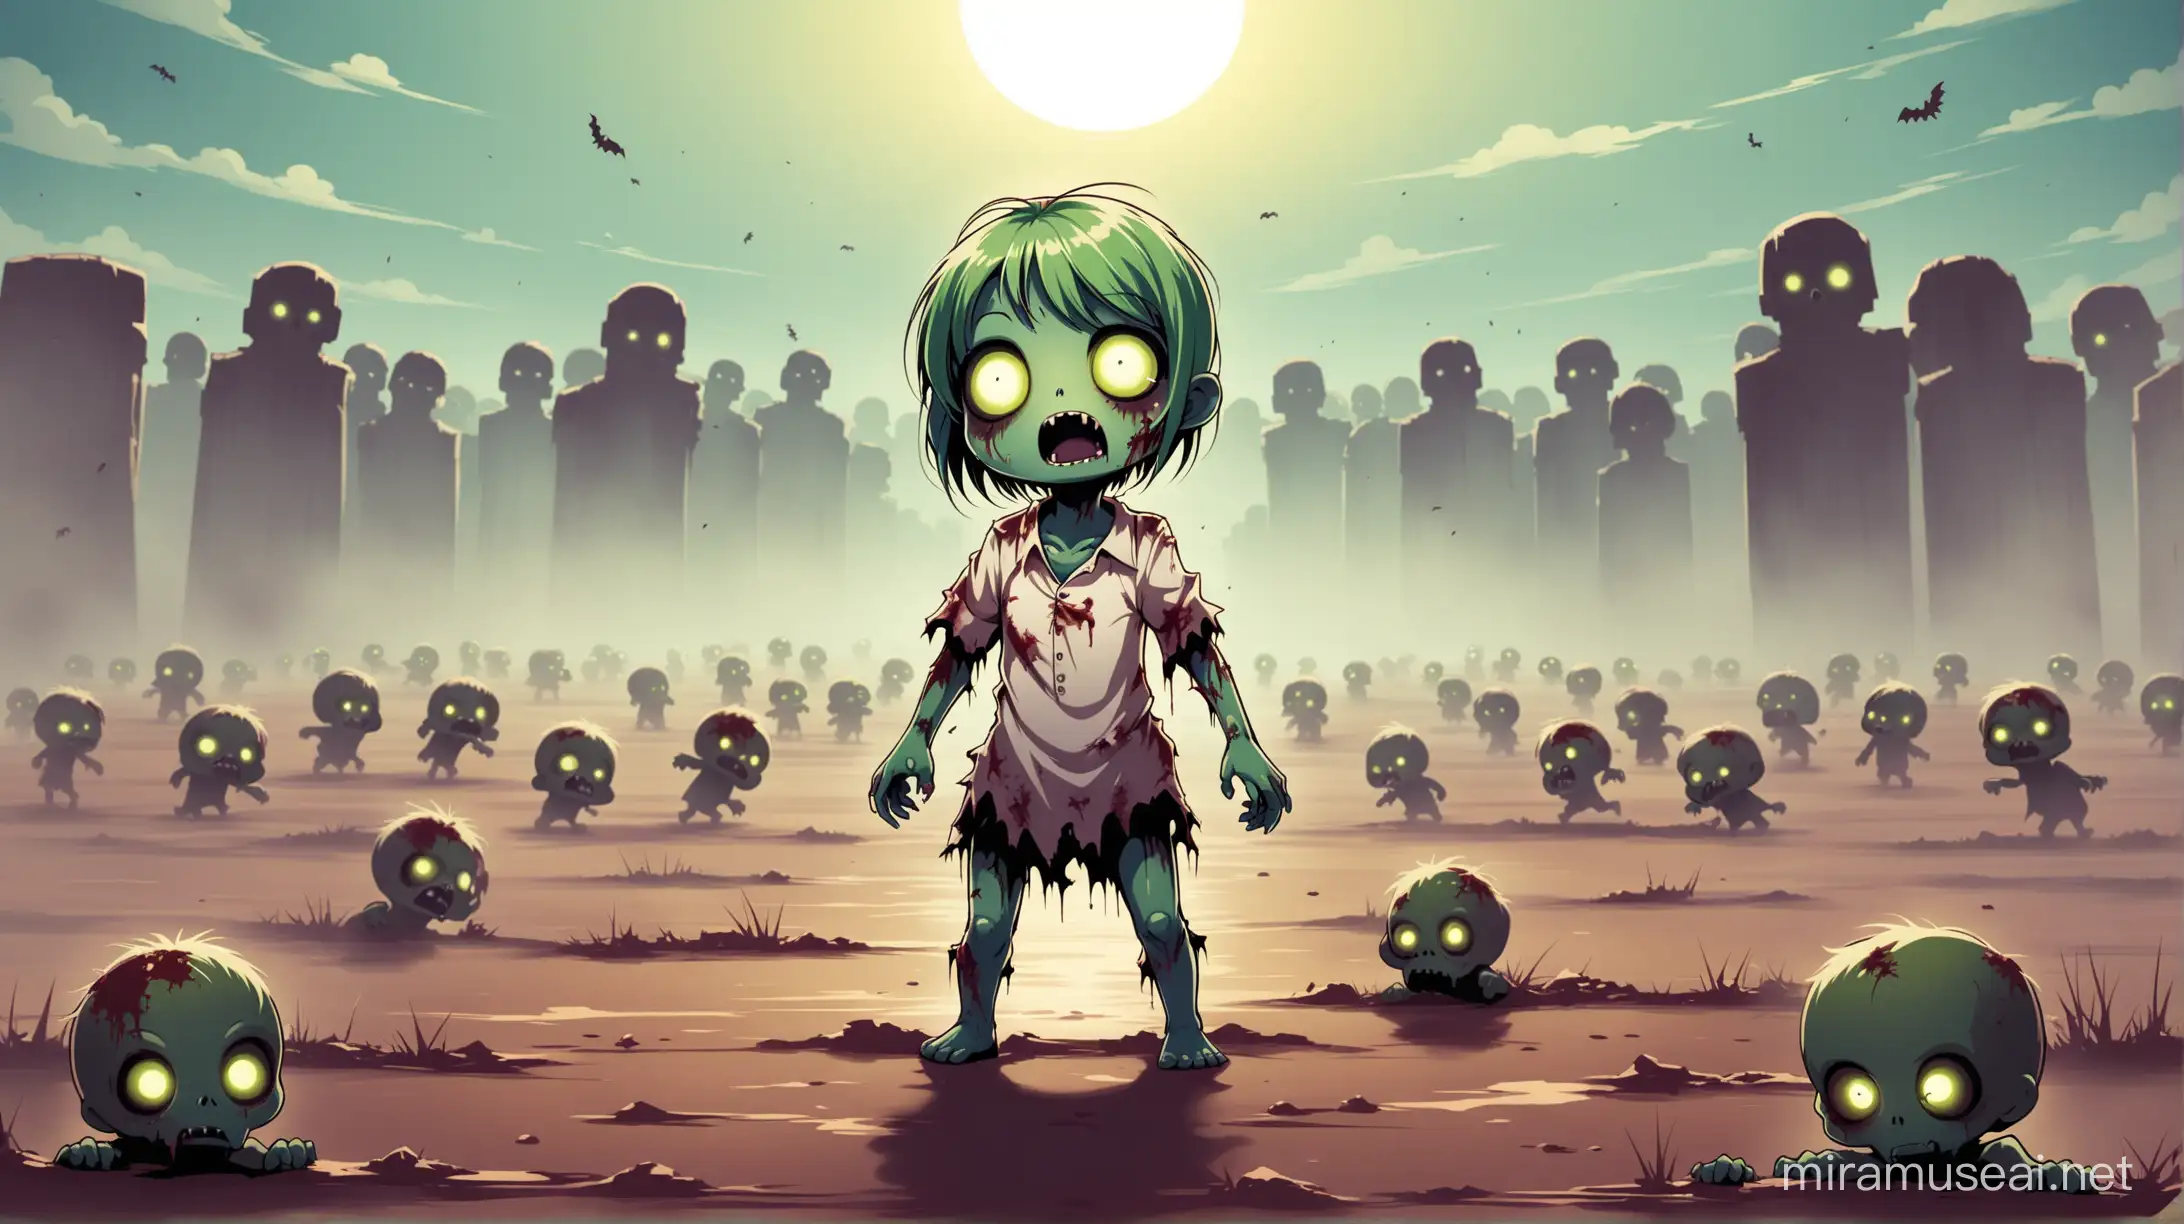 Cute Little Zombie Stands Amidst Battlefield Destruction